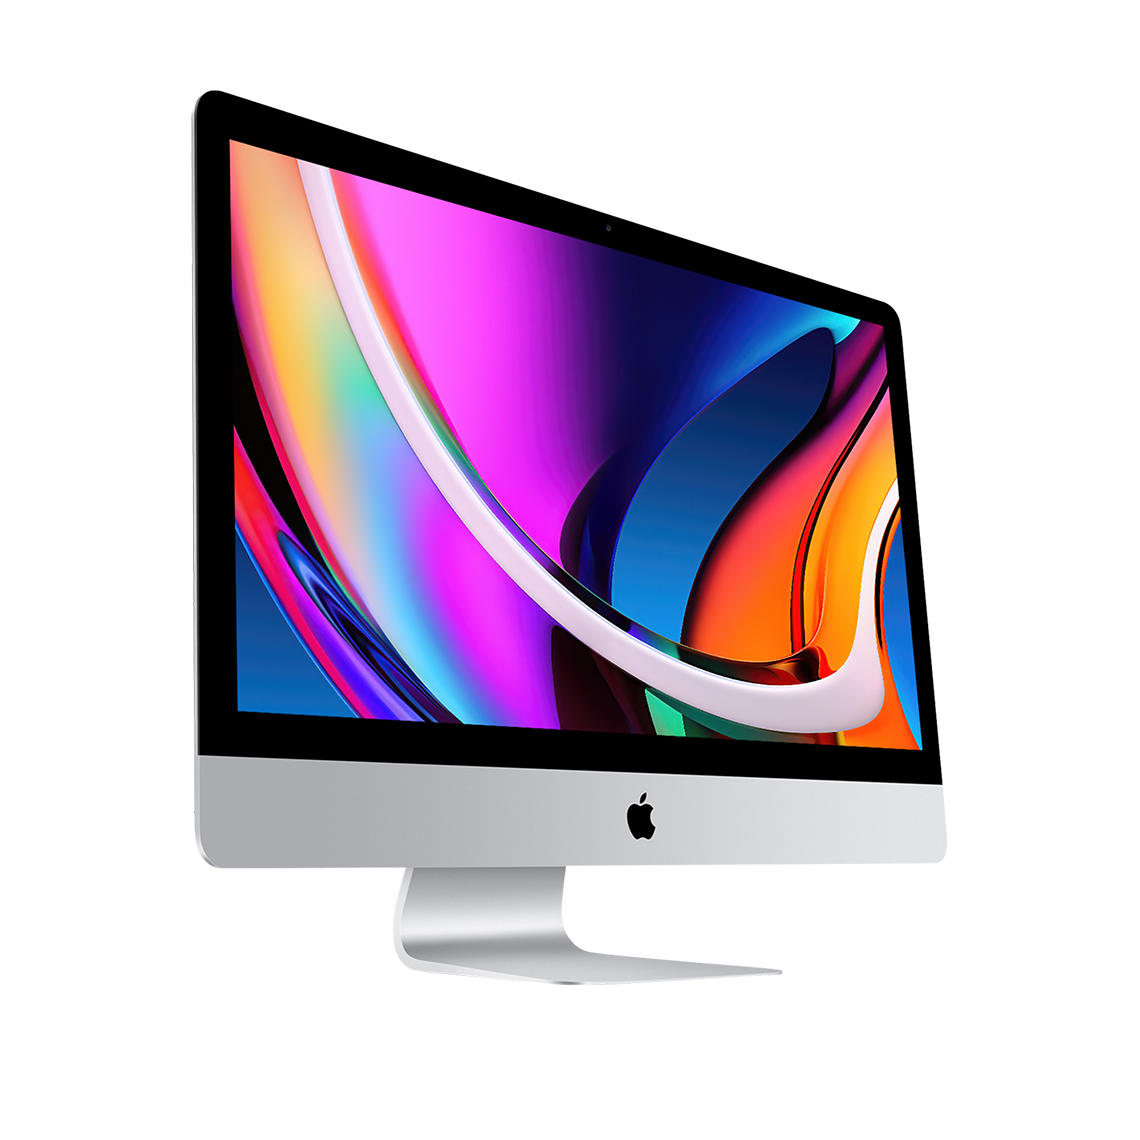 2020 iMac 27-inch 5K - Intel Core i7, 128GB, 512GB Flash, Radeon Pro 5700 8GB, Grade A